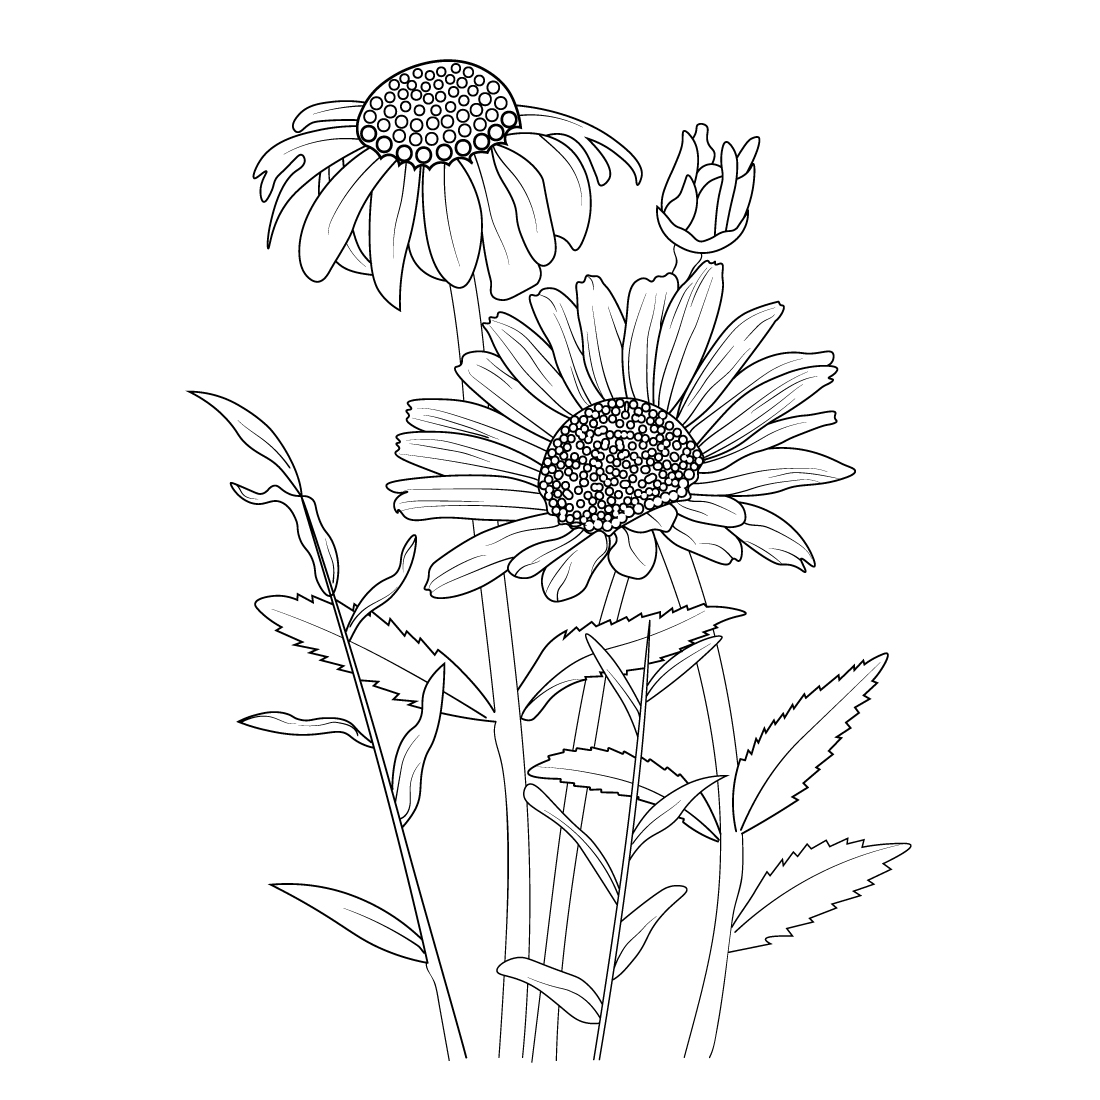 gerbera daisy drawing outline, easy gerbera daisy drawing, outline simple daisy drawing cover image.